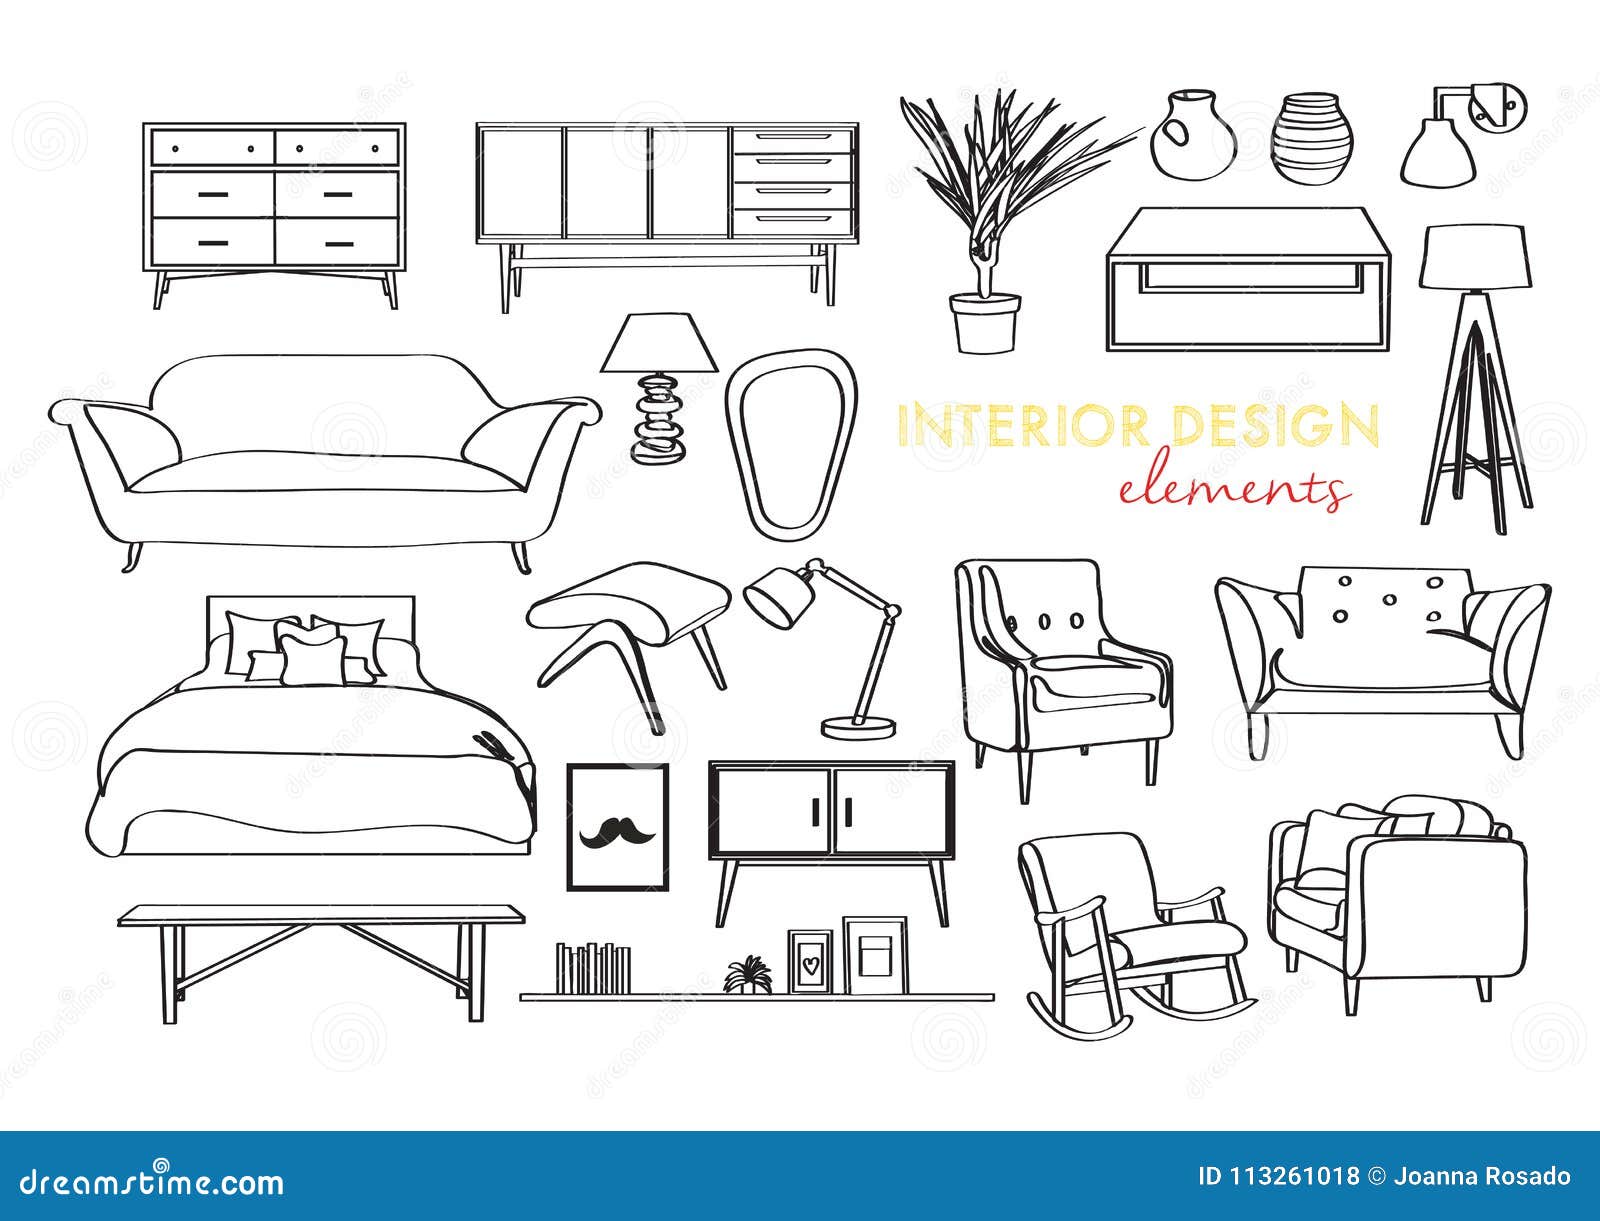 how to sketch interior design - YouTube